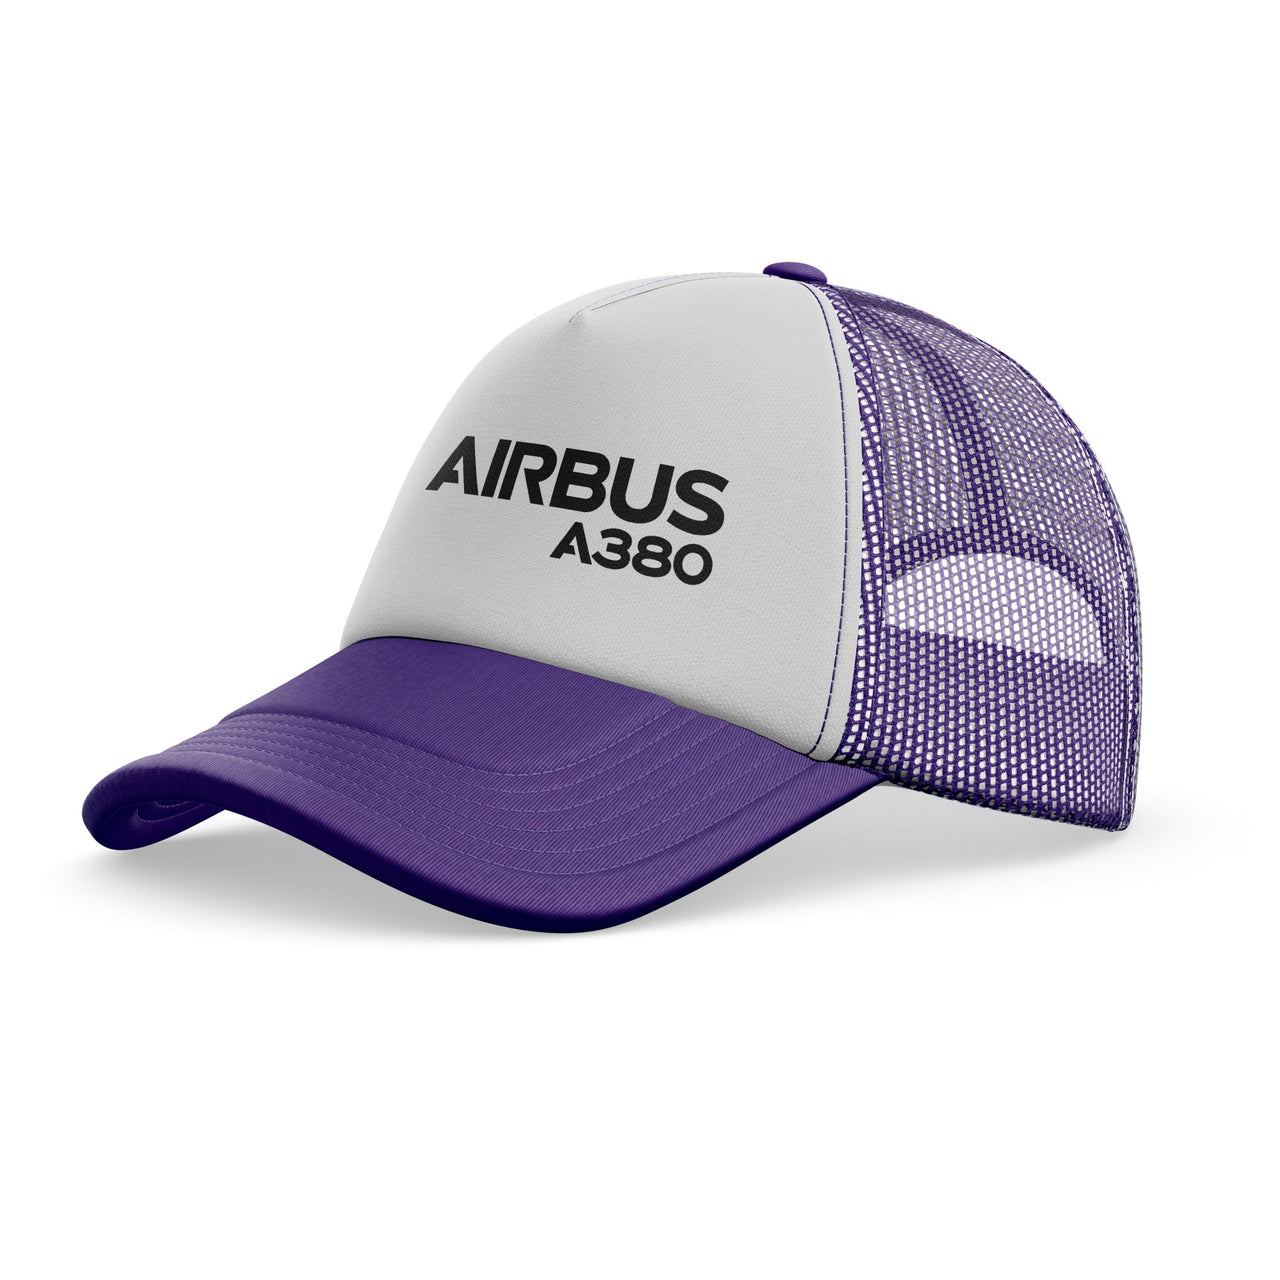 Airbus A380 & Text Designed Trucker Caps & Hats